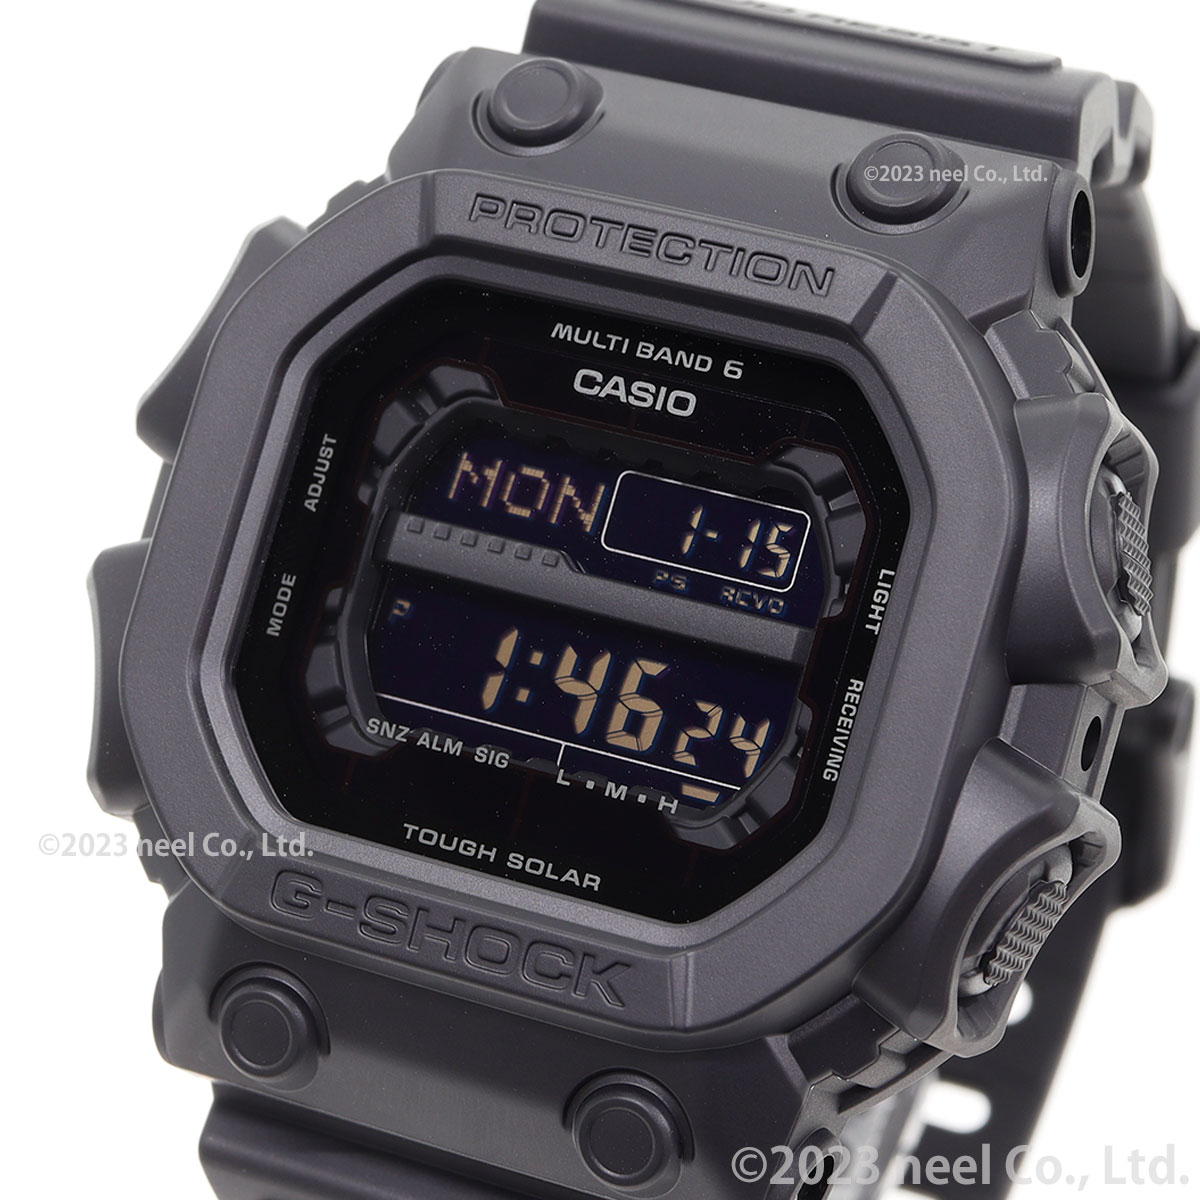 Gショック G-SHOCK 電波ソーラー 腕時計 メンズ 黒 ブラック GXW-56BB 